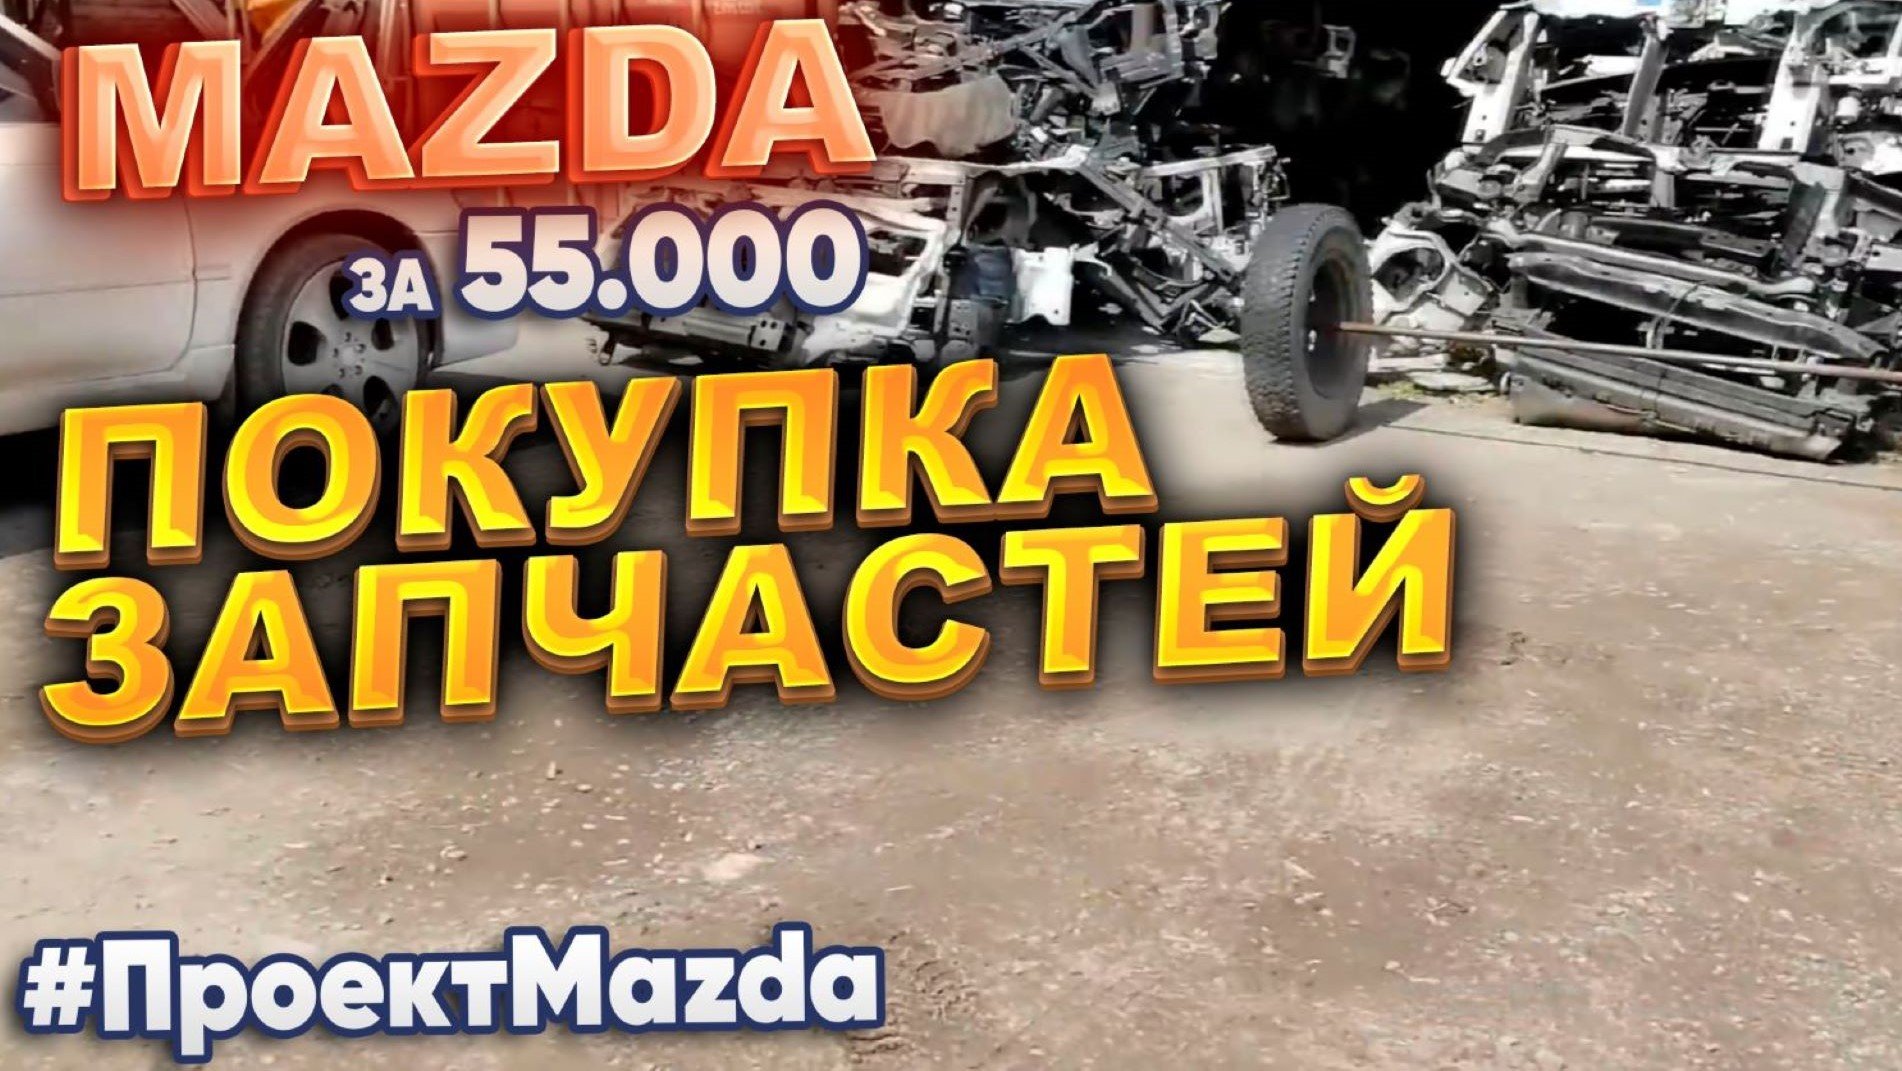 Mazda за 55.000р. Покупка запчастей. #ПроектMazda